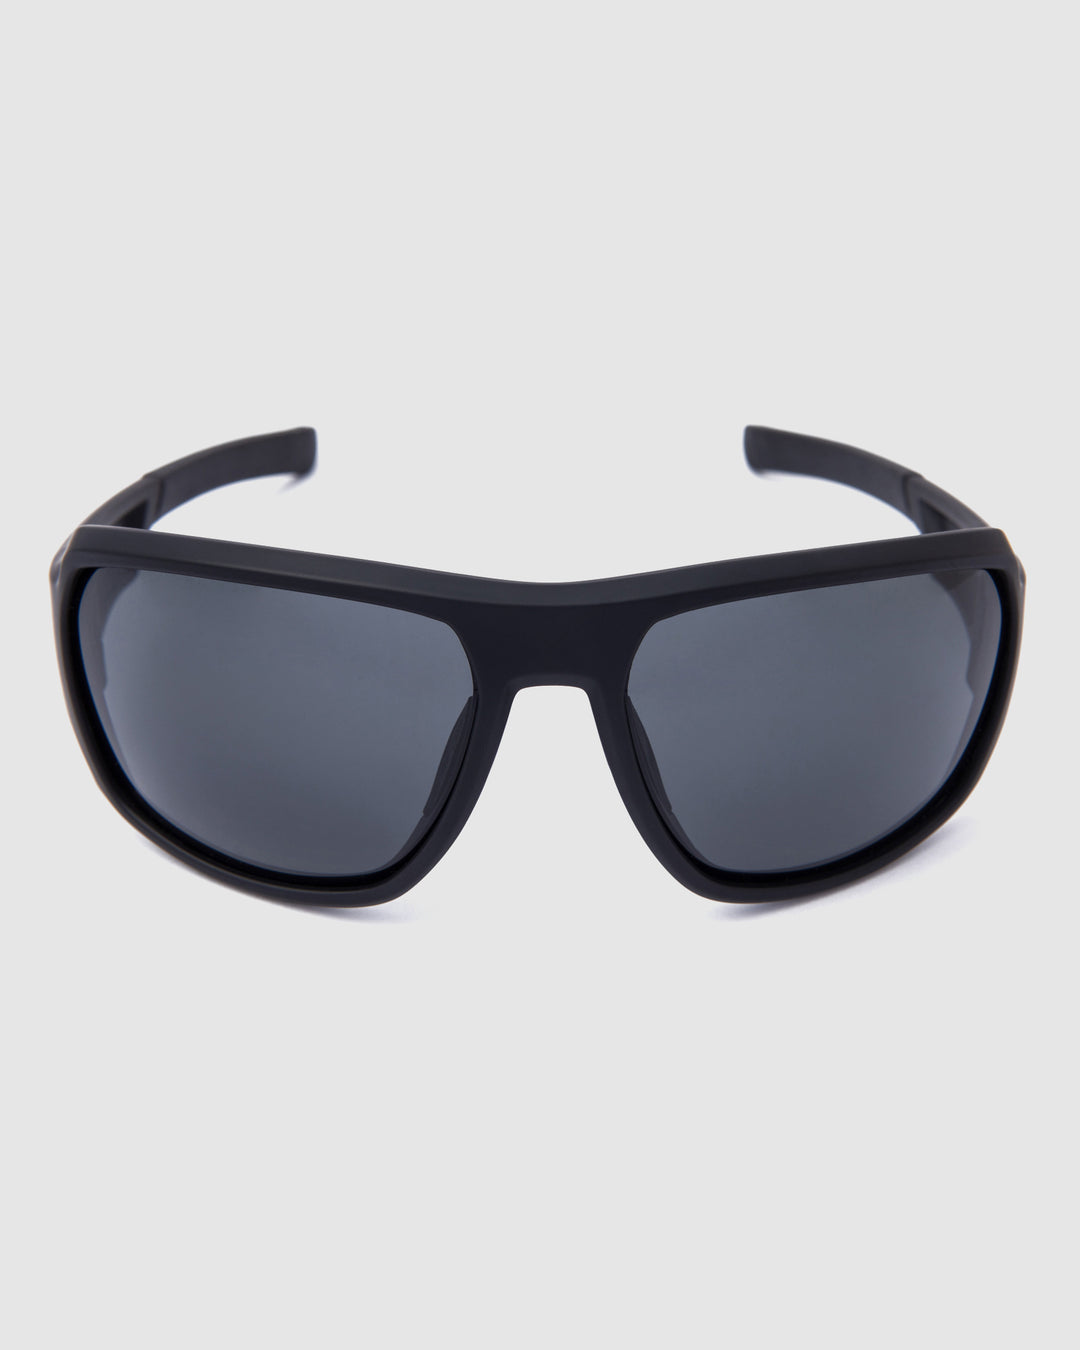 UNIT Storm - Medium Impact Safety Sunglasses - Black